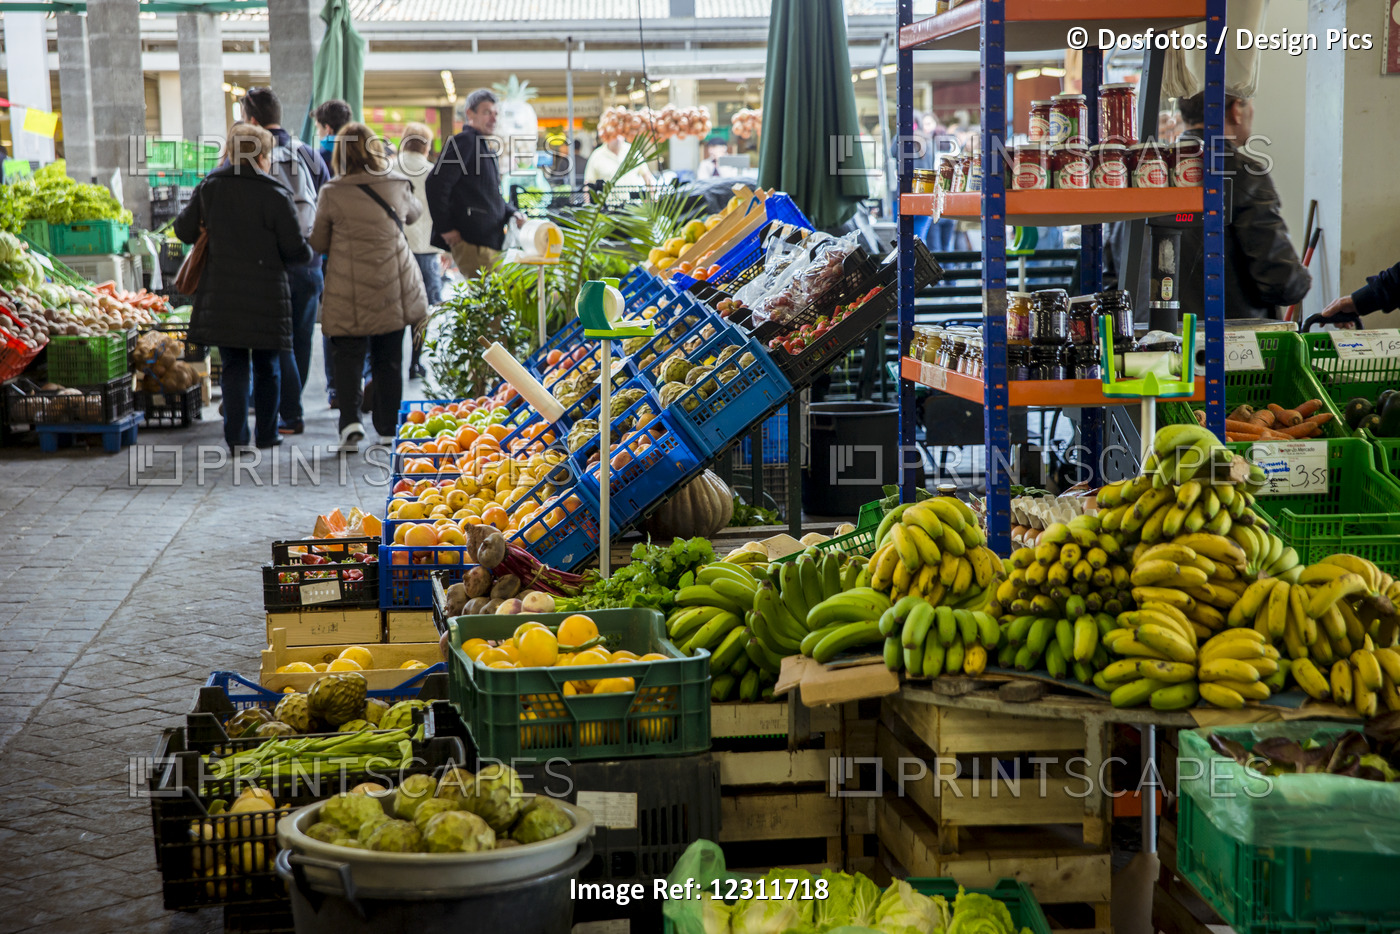 Fruits For Sale At Mercado Da Graca; Ponta Delgada, Sao Miguel, Azores, Portugal